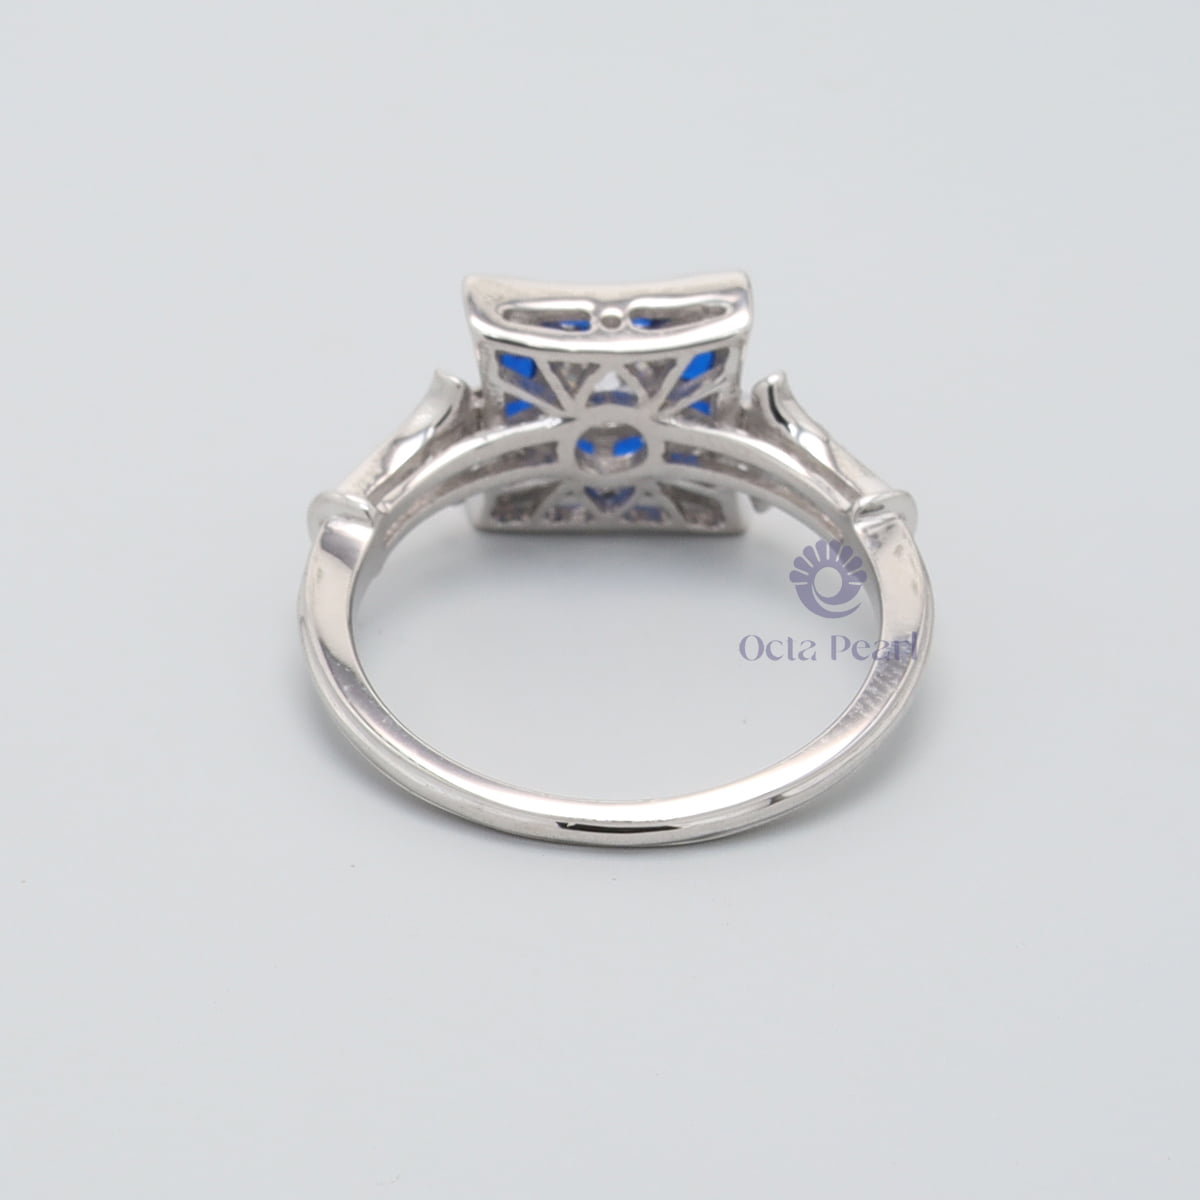 Vintage Art Deco-Inspired Wedding Ring